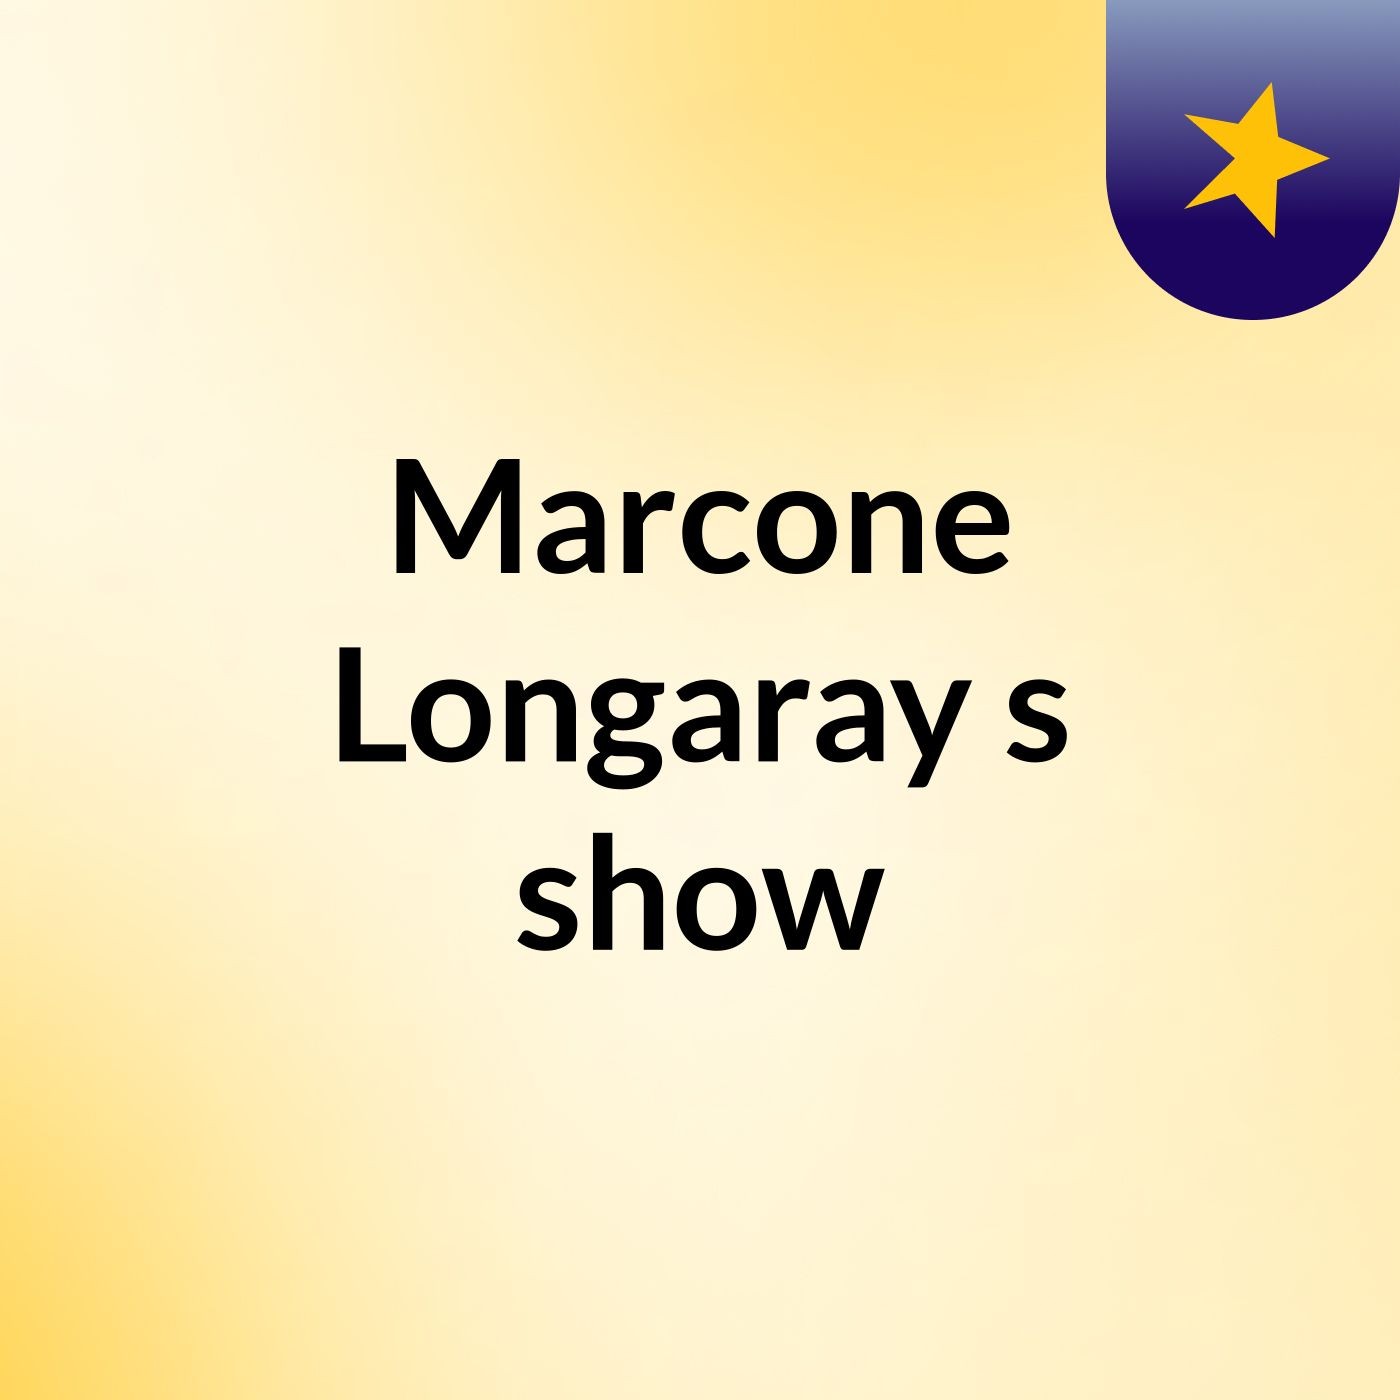 Marcone Longaray's show